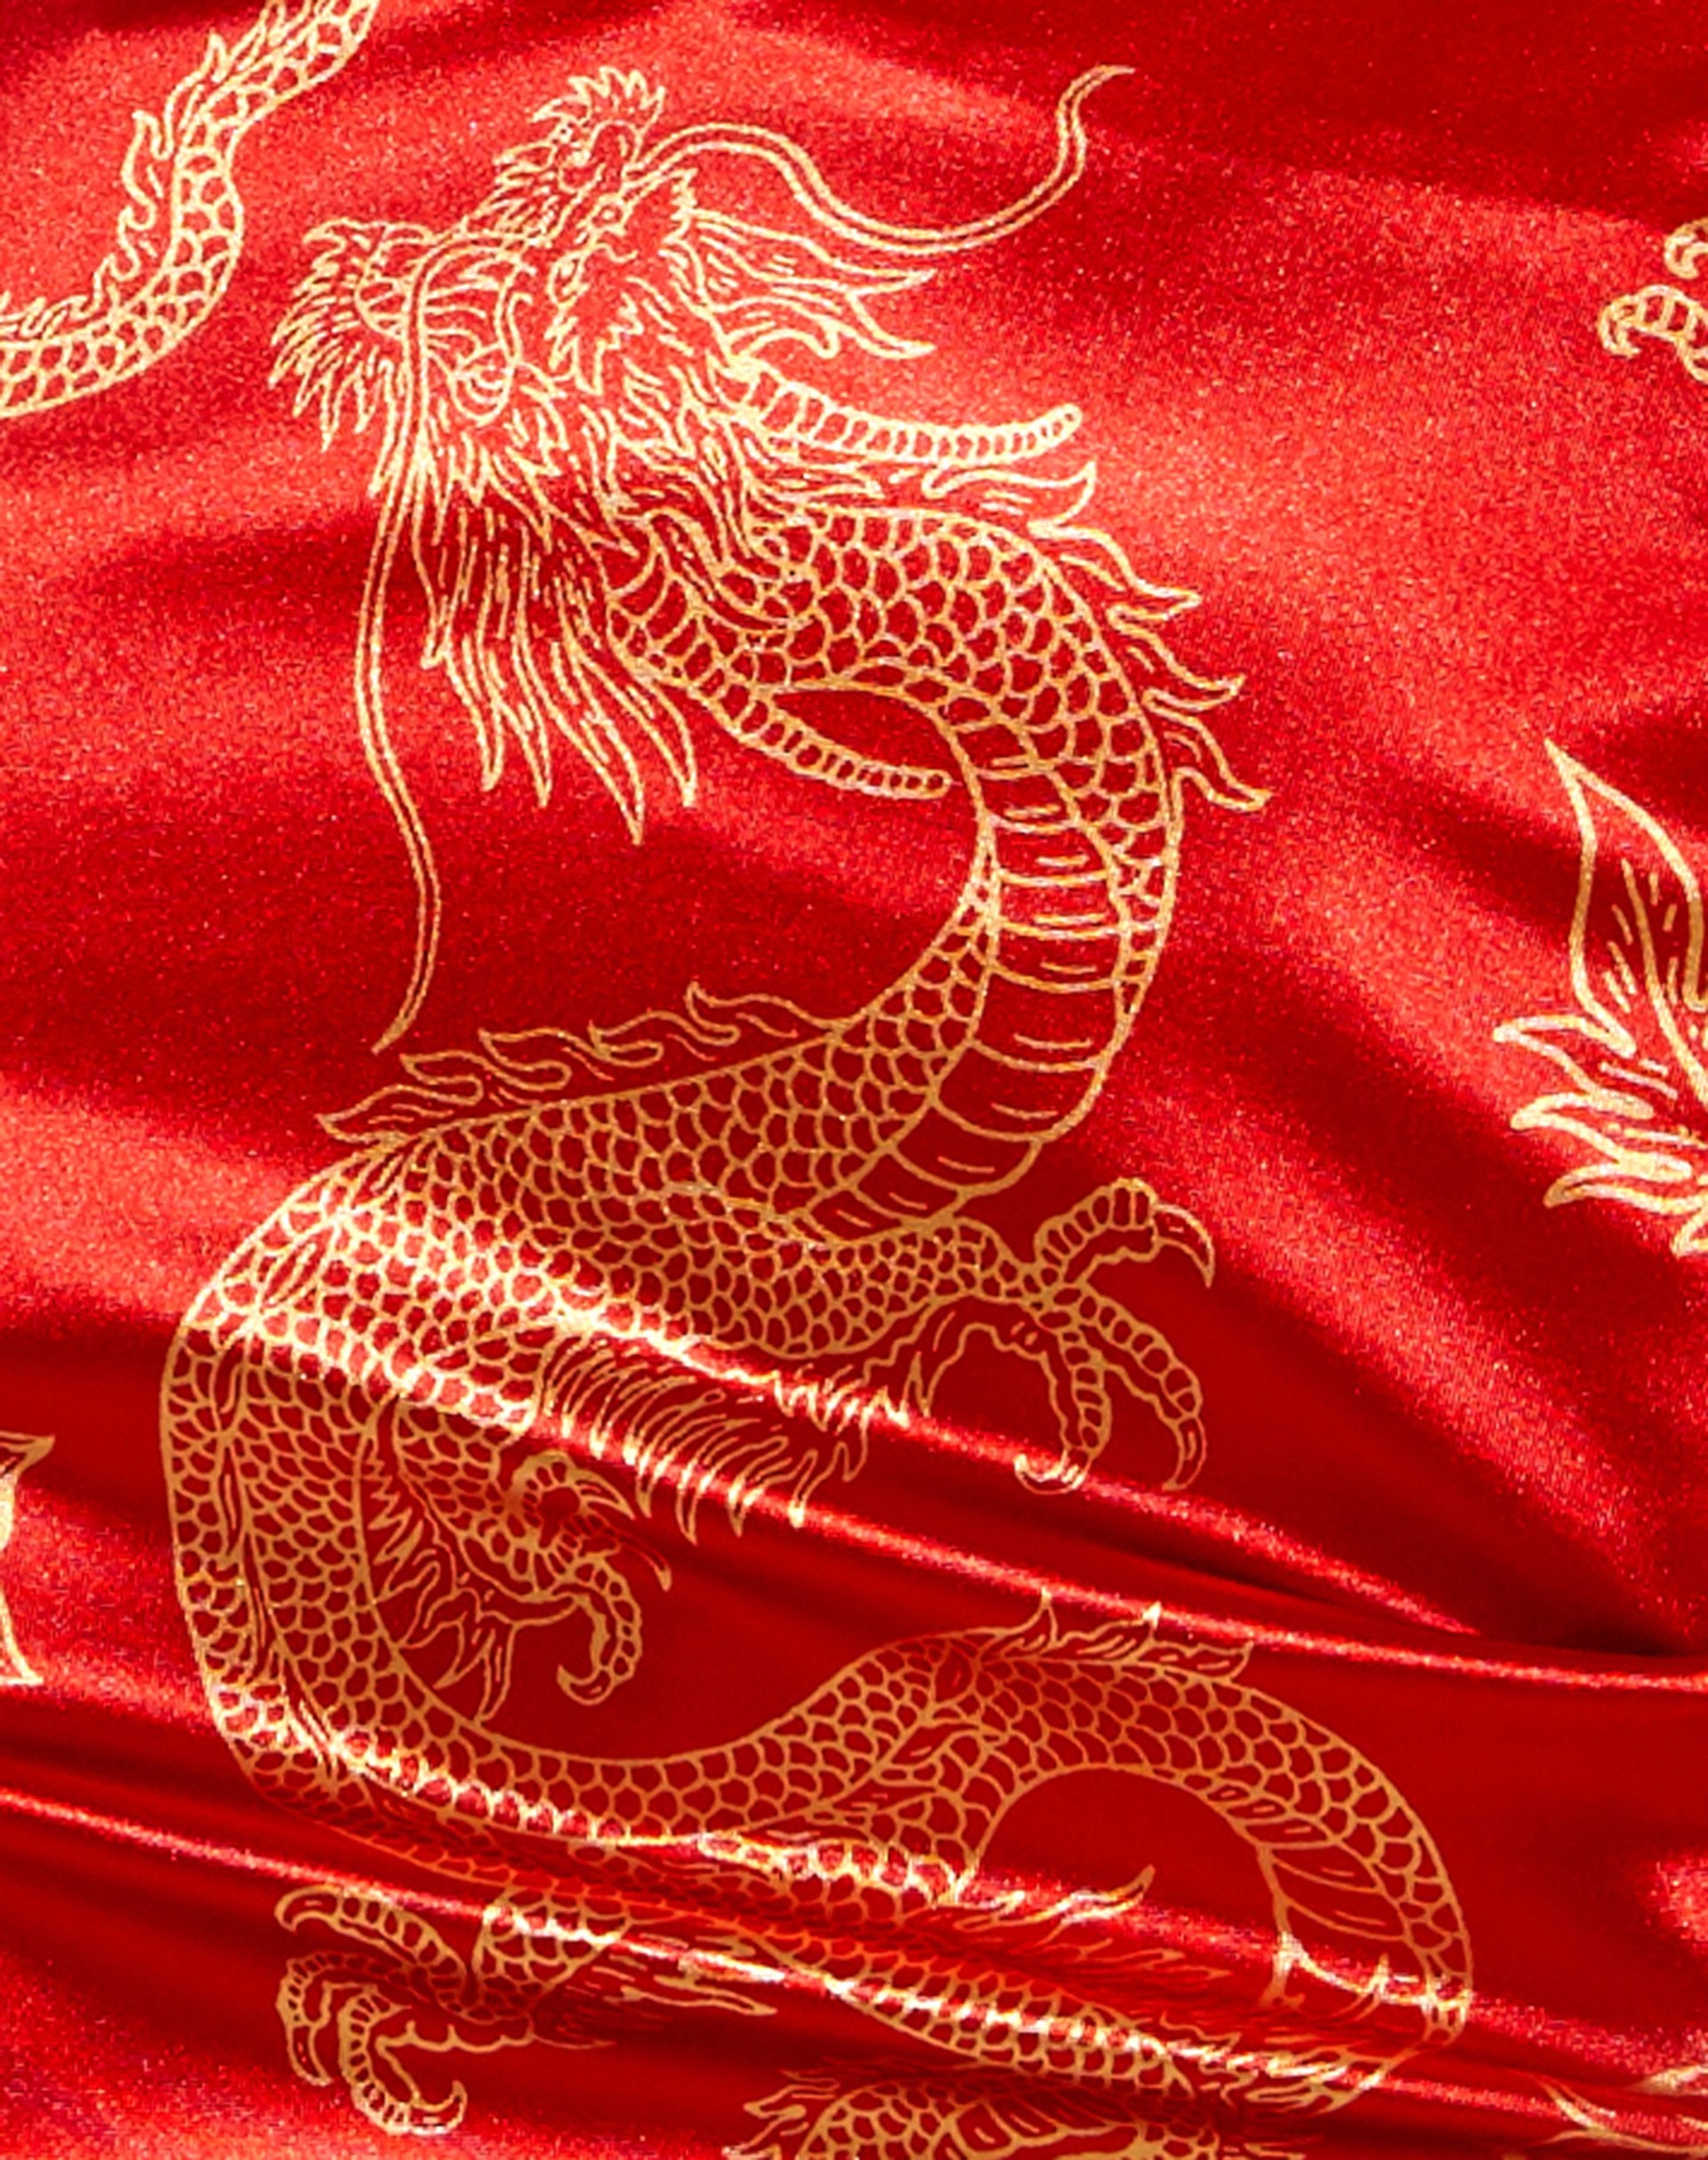 Image of Wren Mini Skirt in Dragon Flower Red and Gold